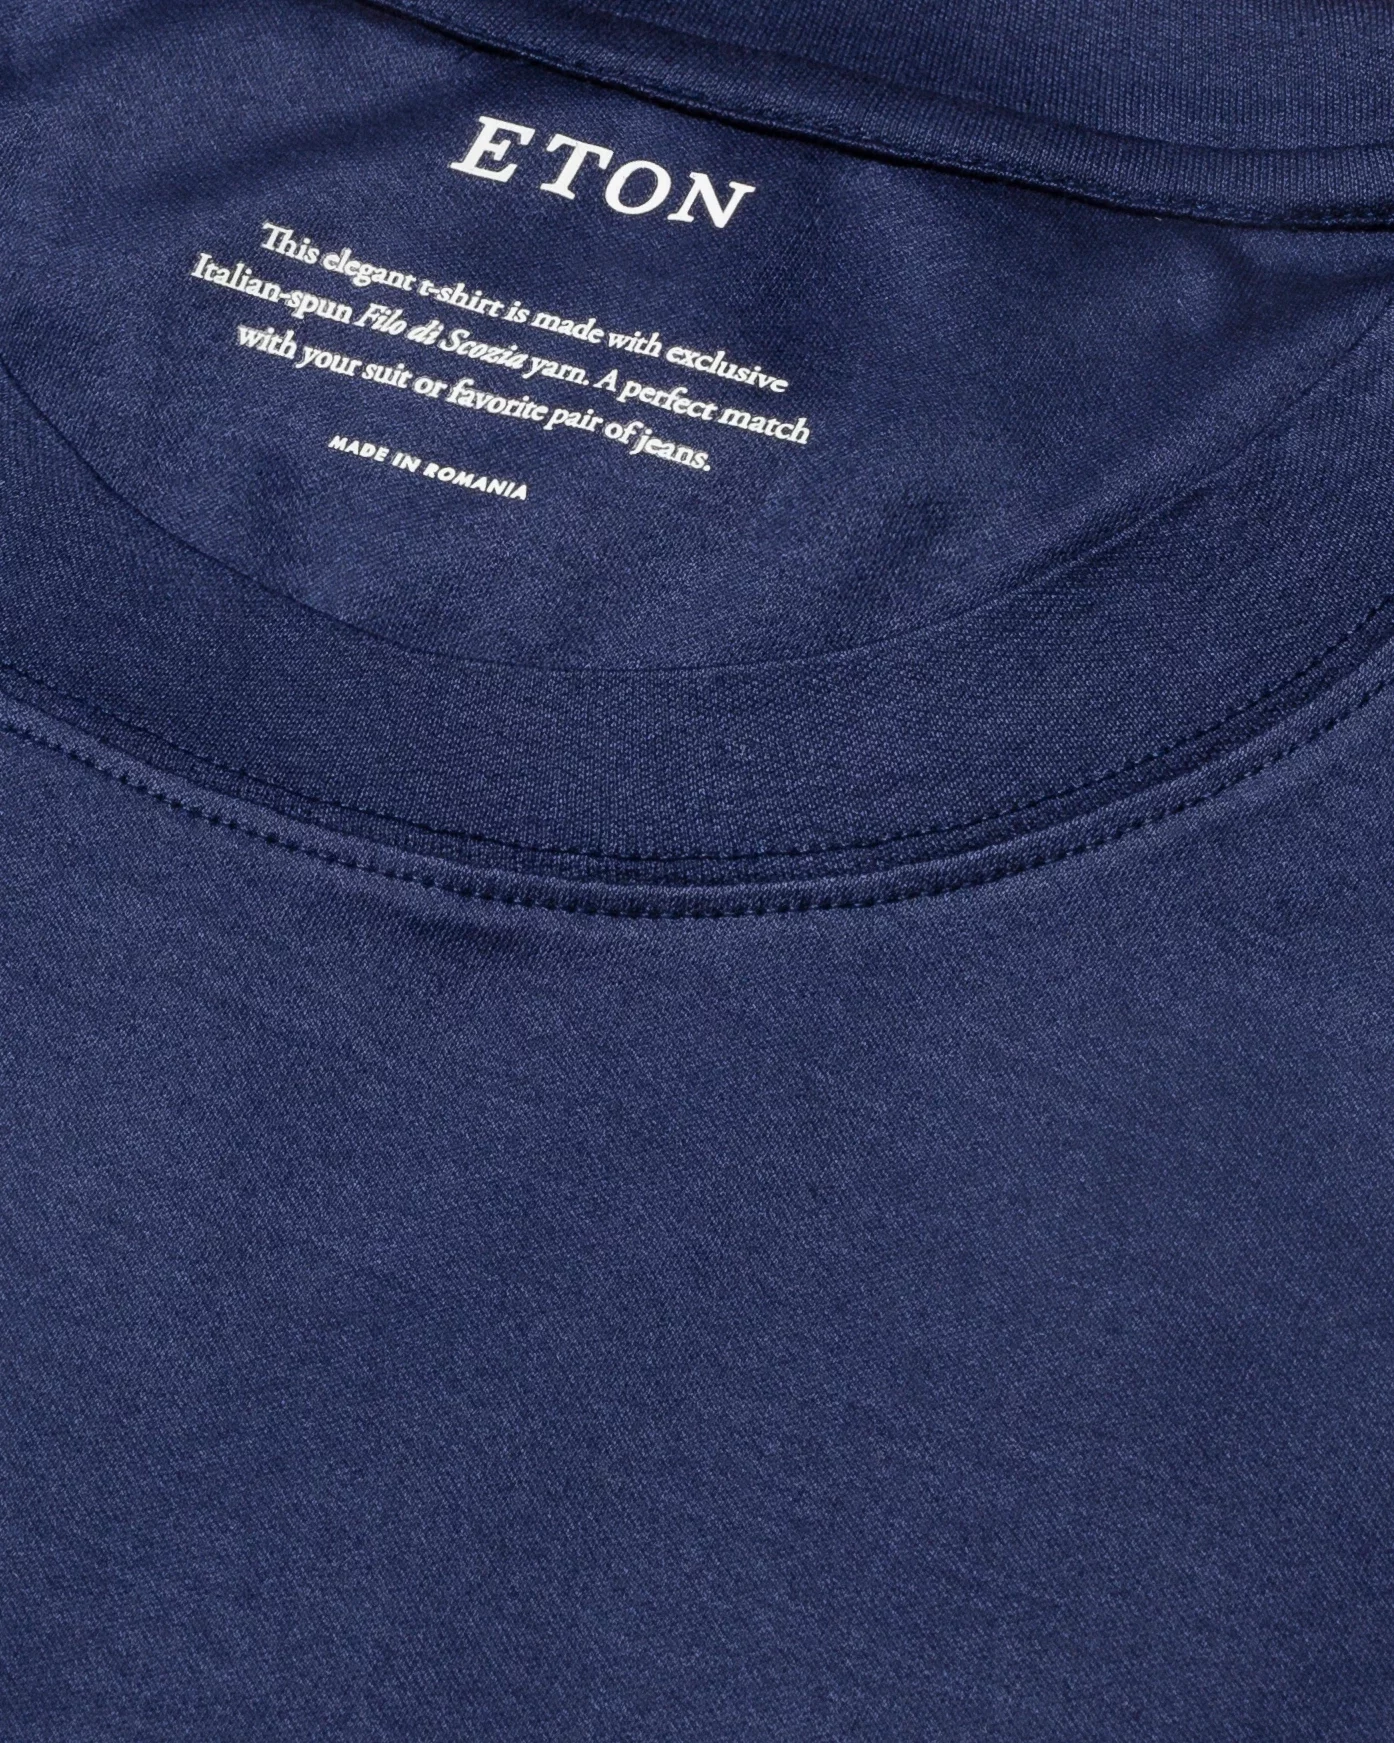 Eton - dark blue filo di scozia t shirt